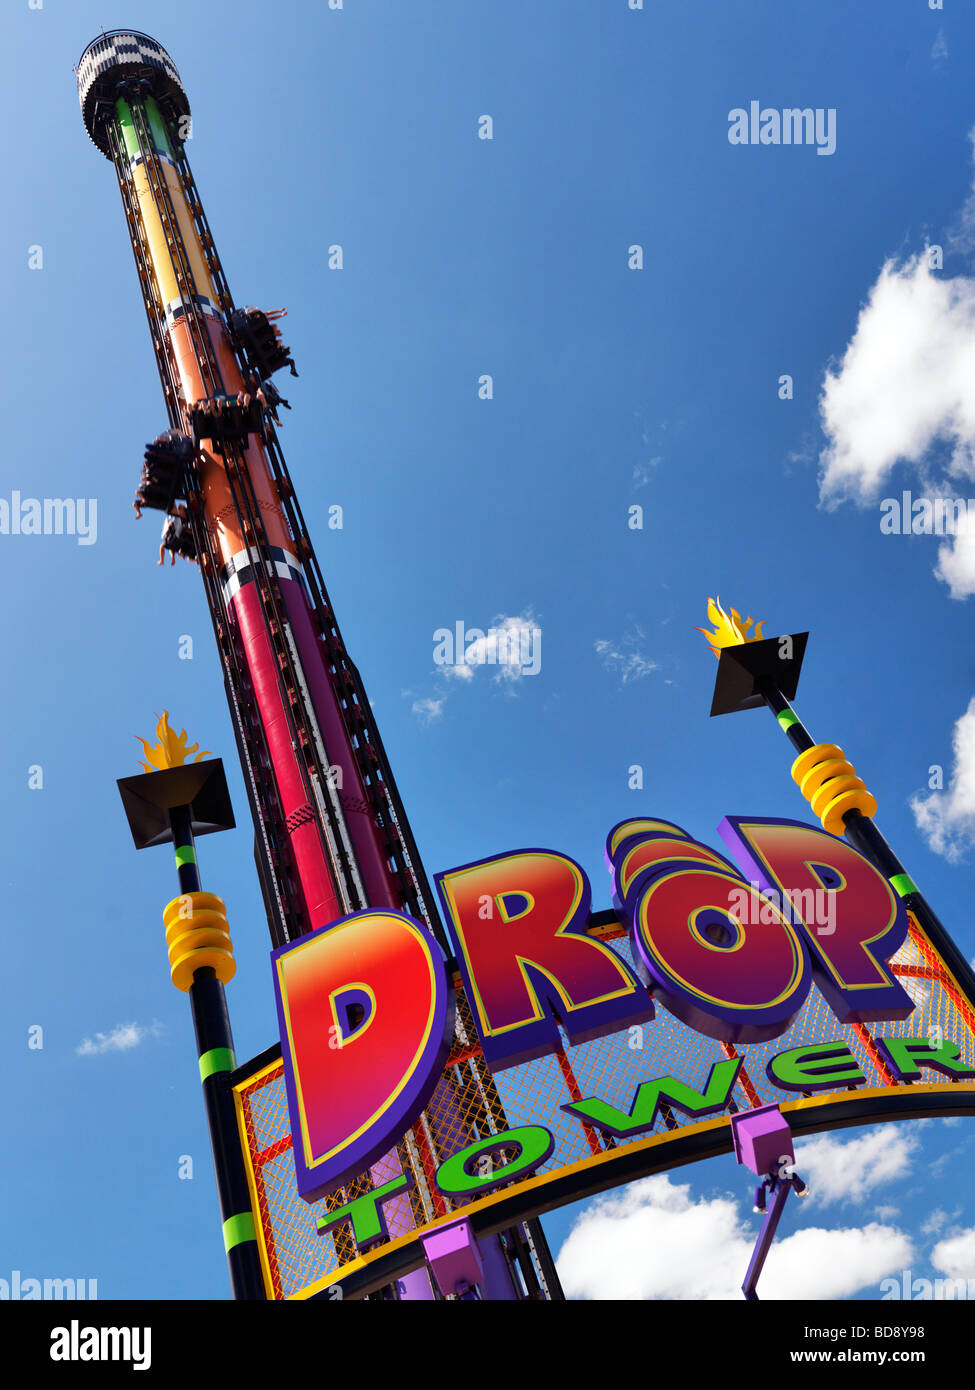 Drop Tower free fall ride at Canada's Wonderland amusement park Stock Photo